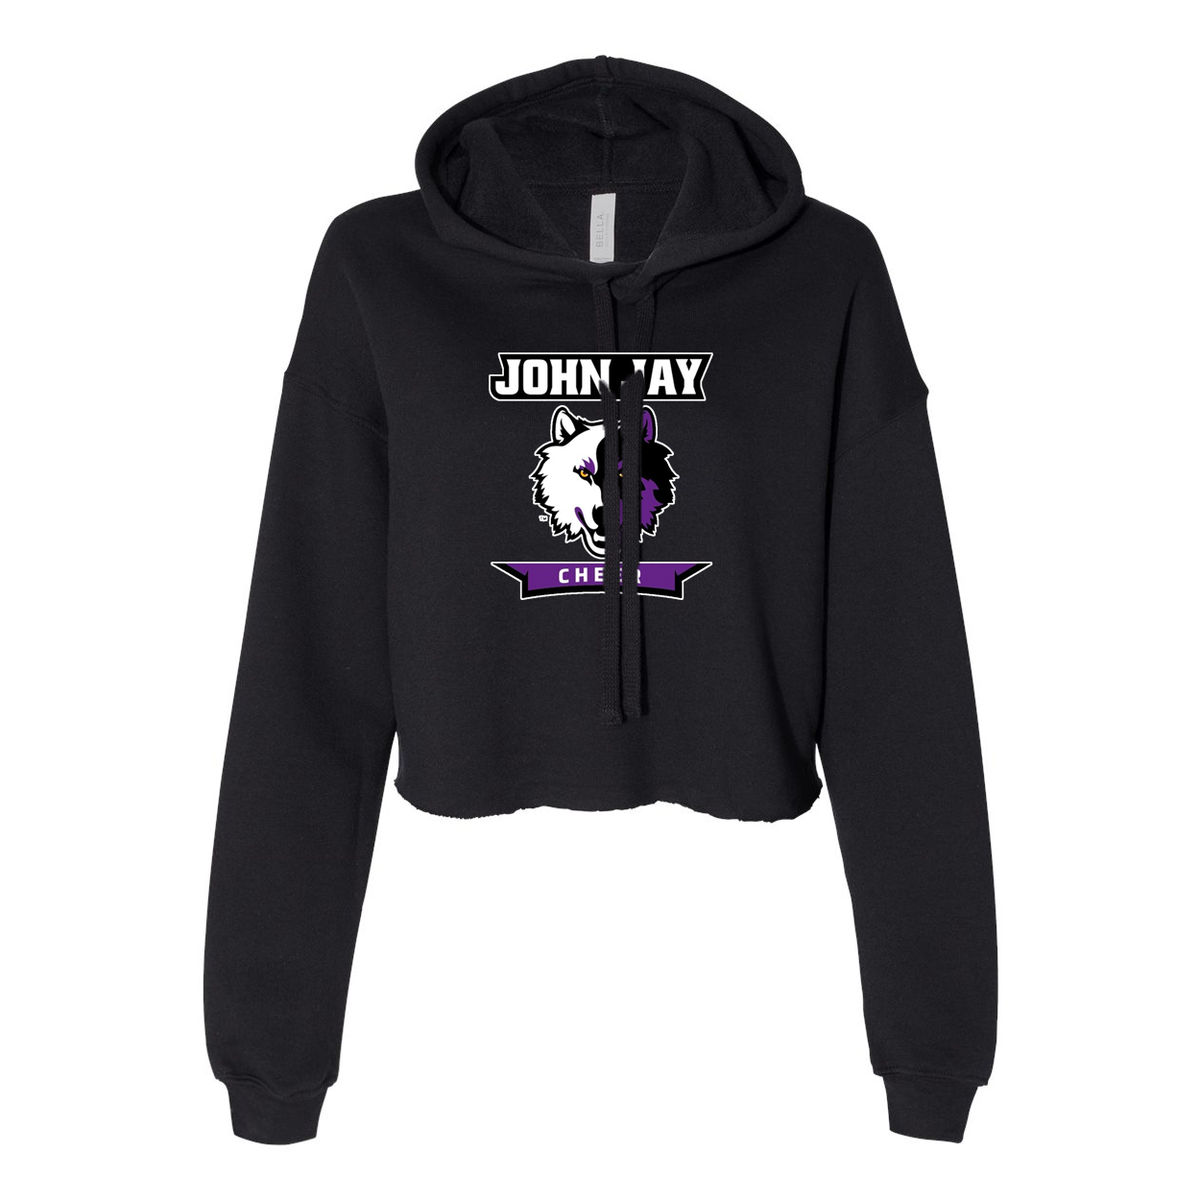 John Jay Youth Cheer Cropped Sweatshirt